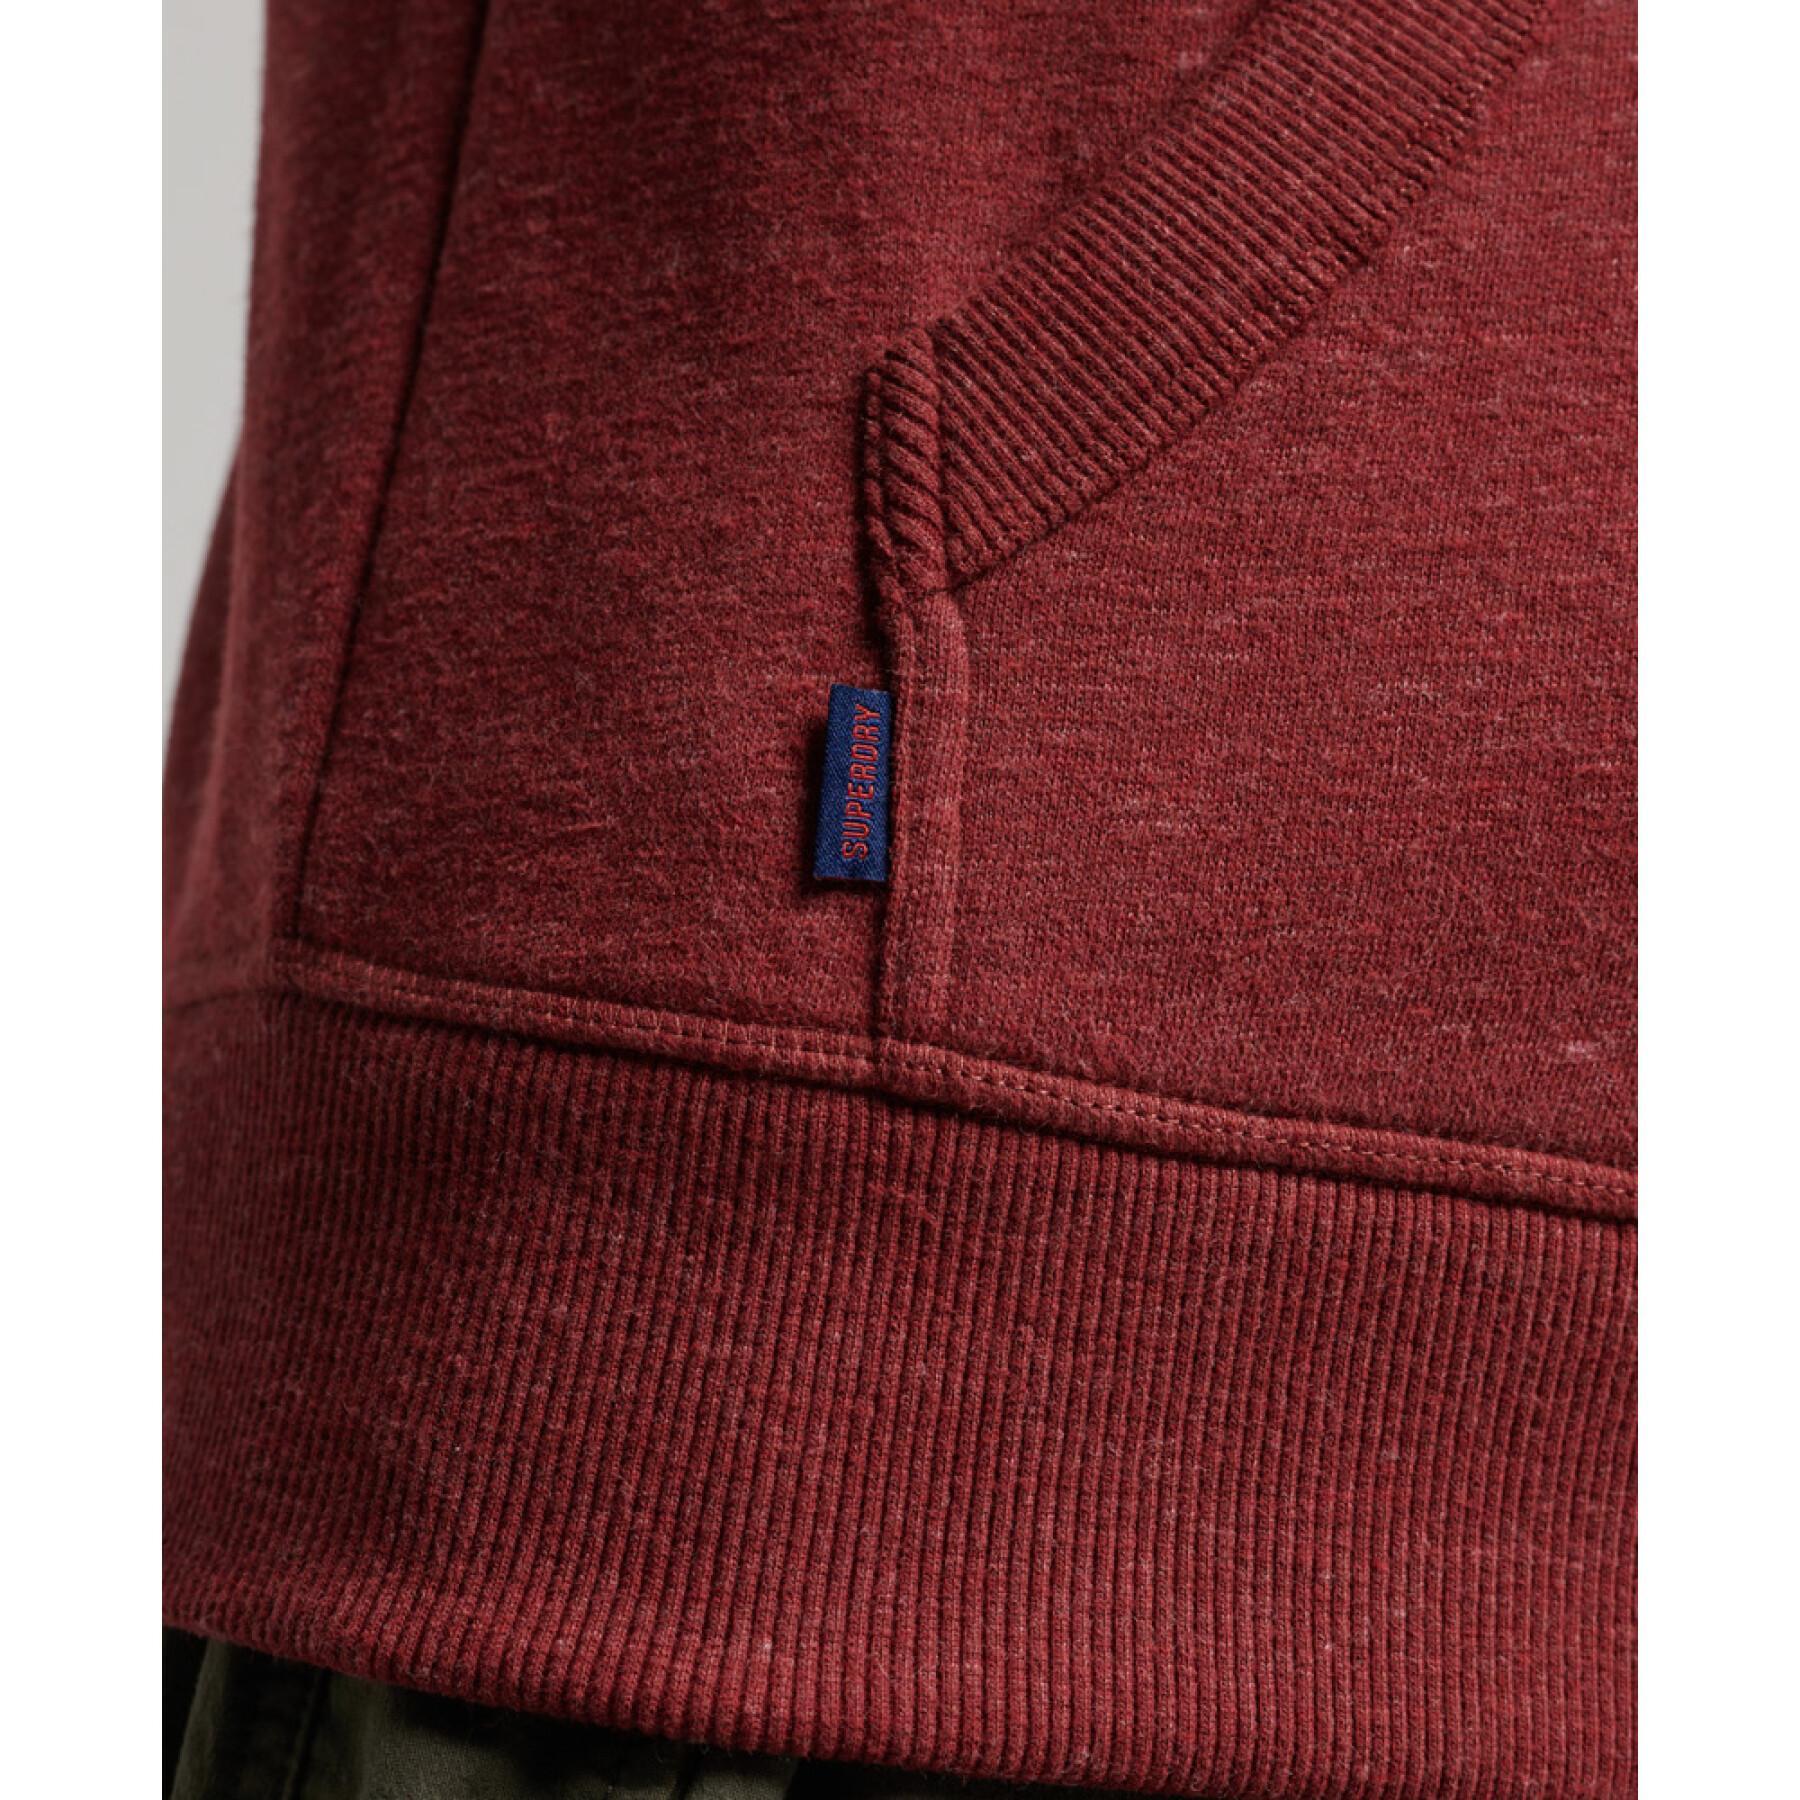 Sweatshirt zapinany na zamek błyskawiczny z kapturem i haftem Superdry Vintage Logo